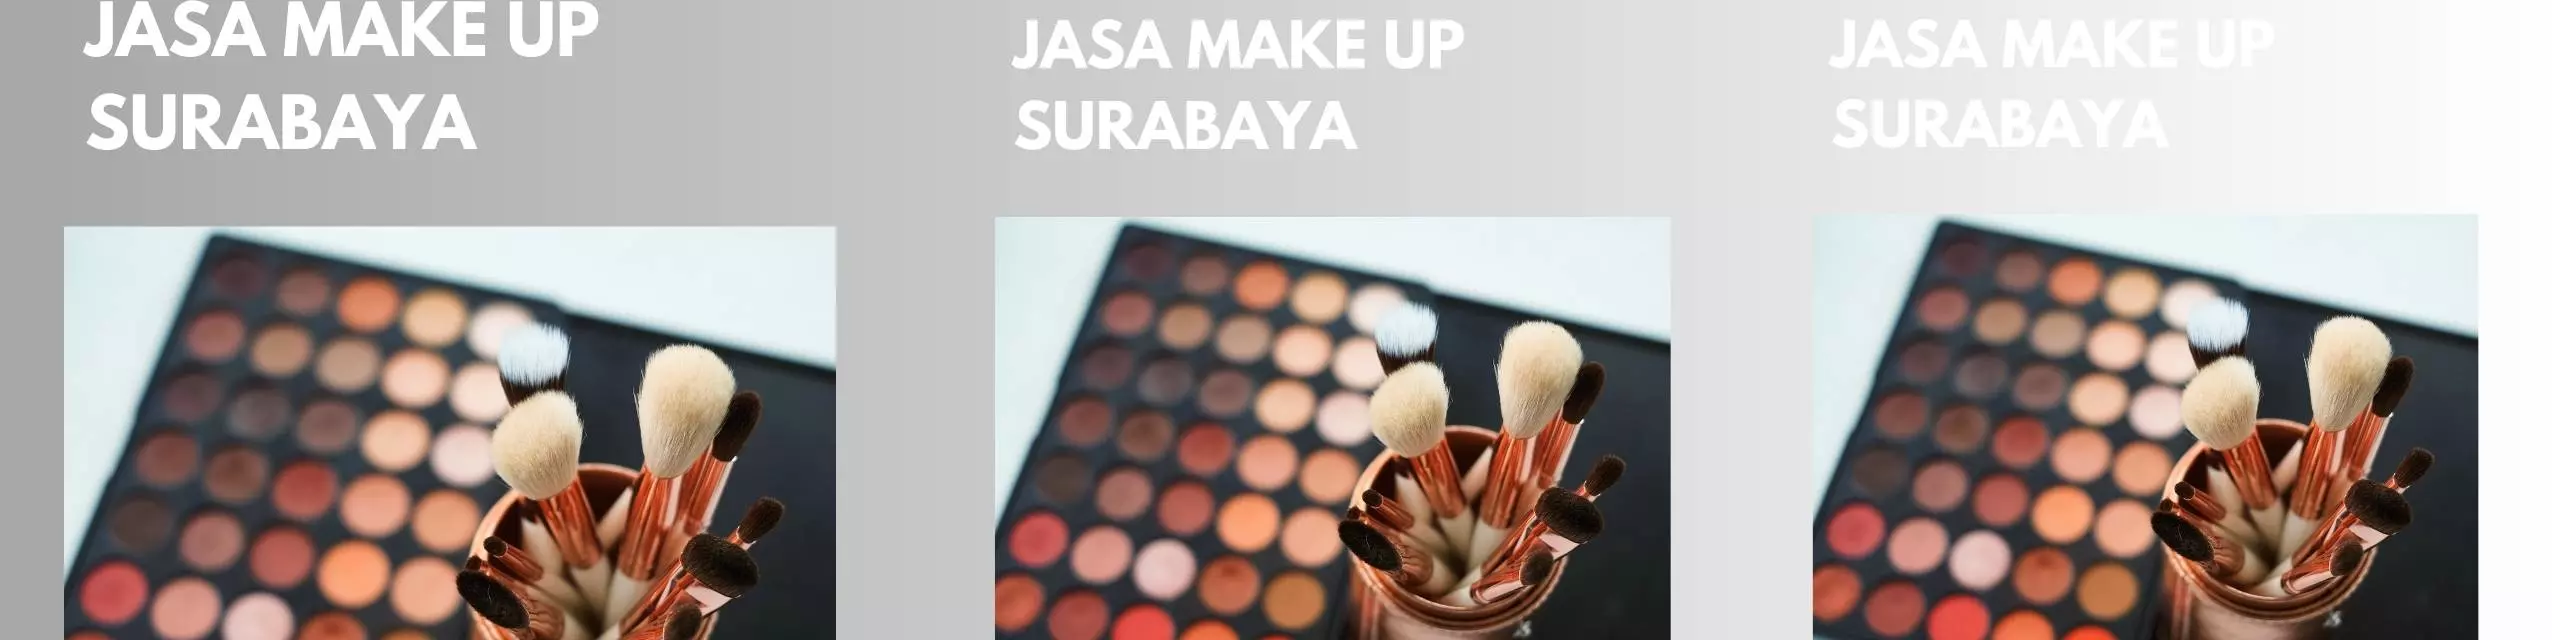 Jasa Make Up Surabaya